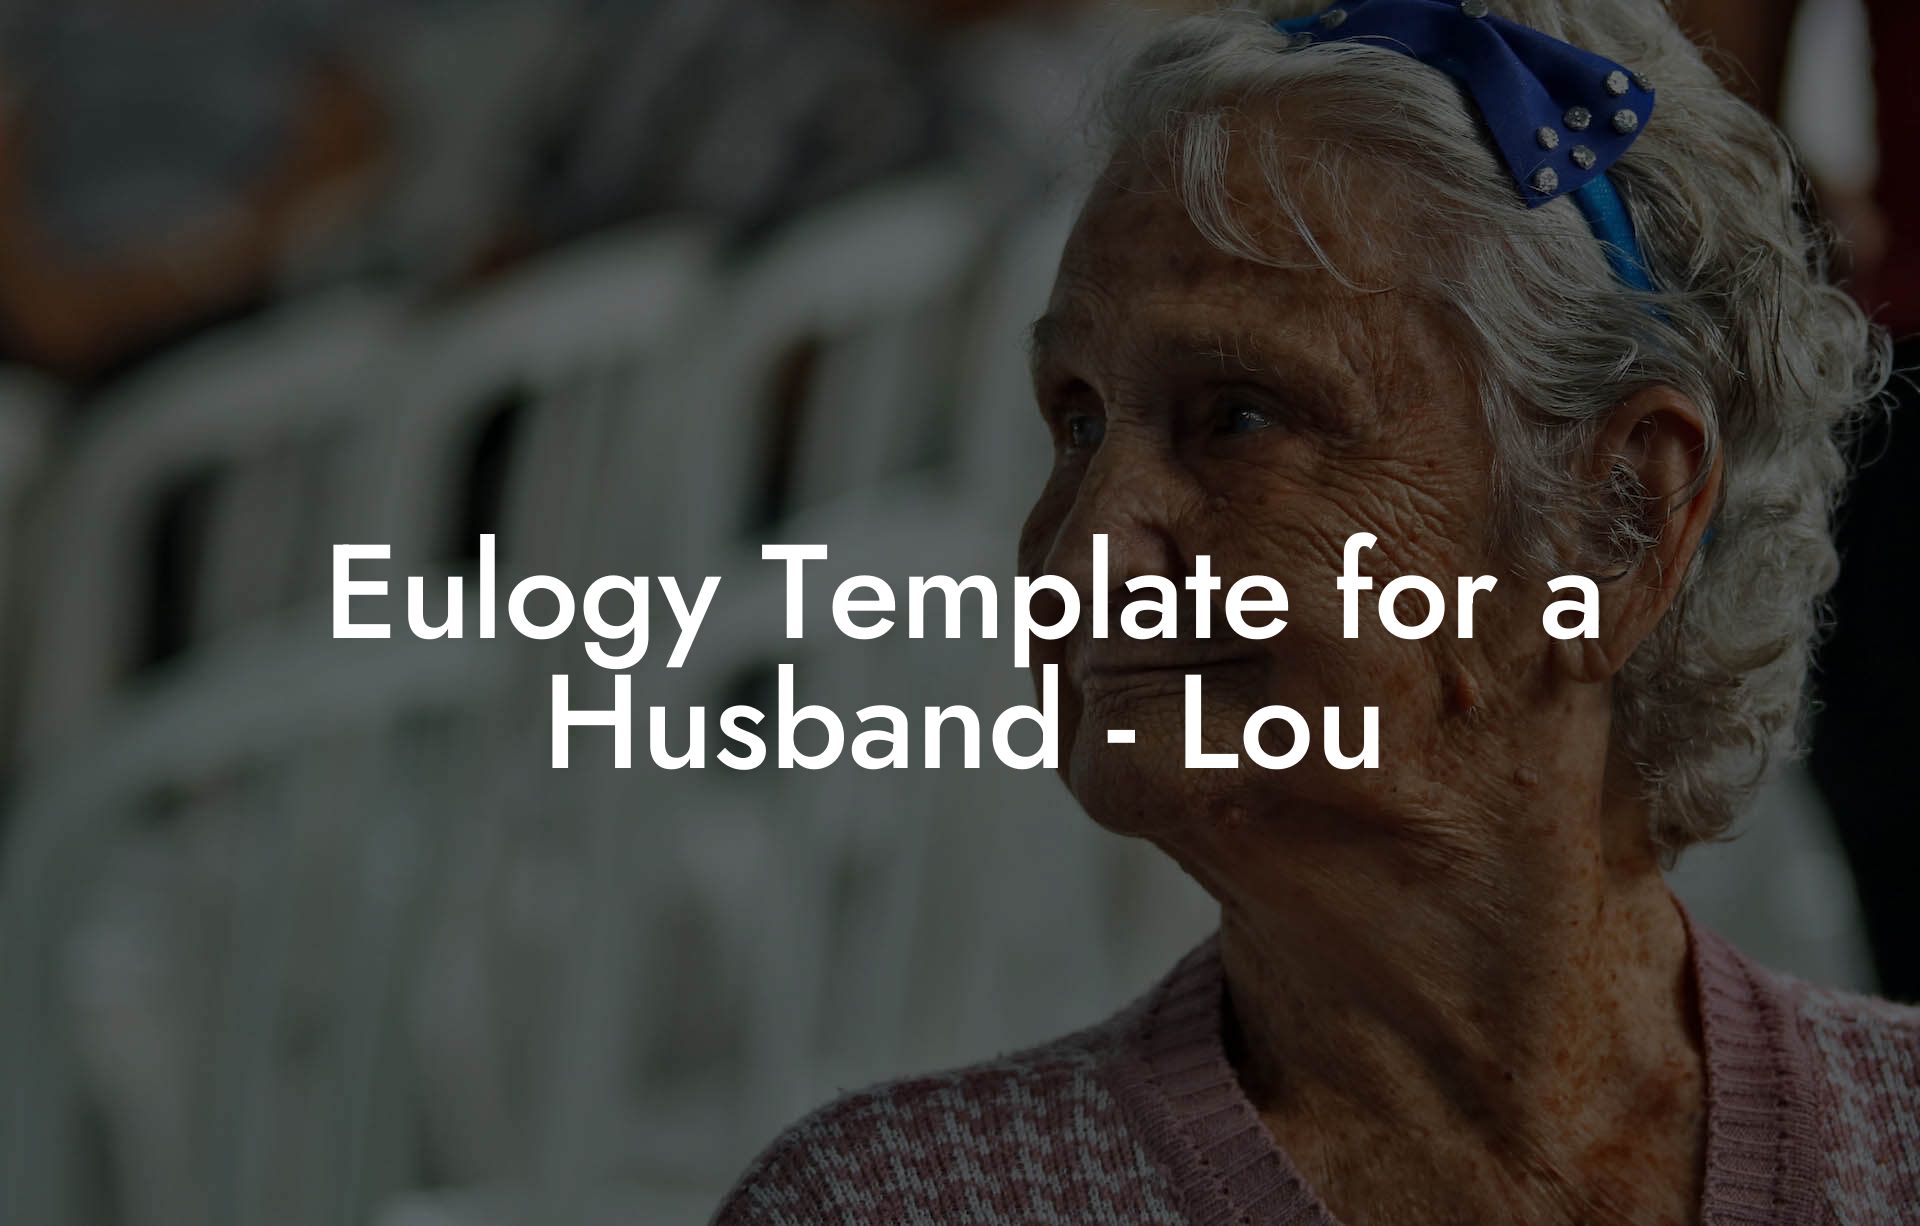 Eulogy Template for a Husband - Lou